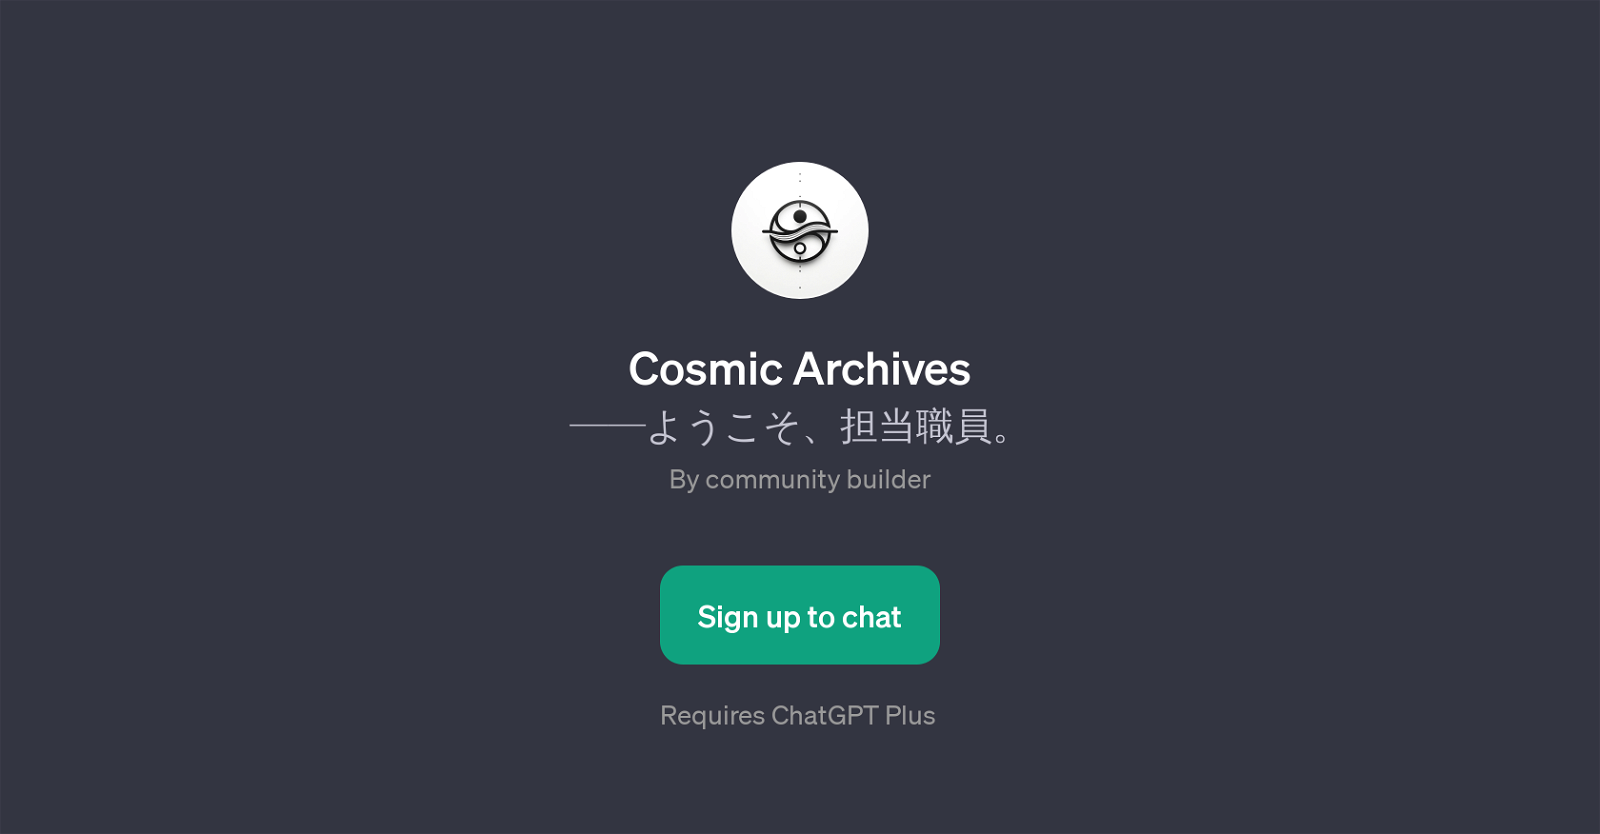 Cosmic Archives website